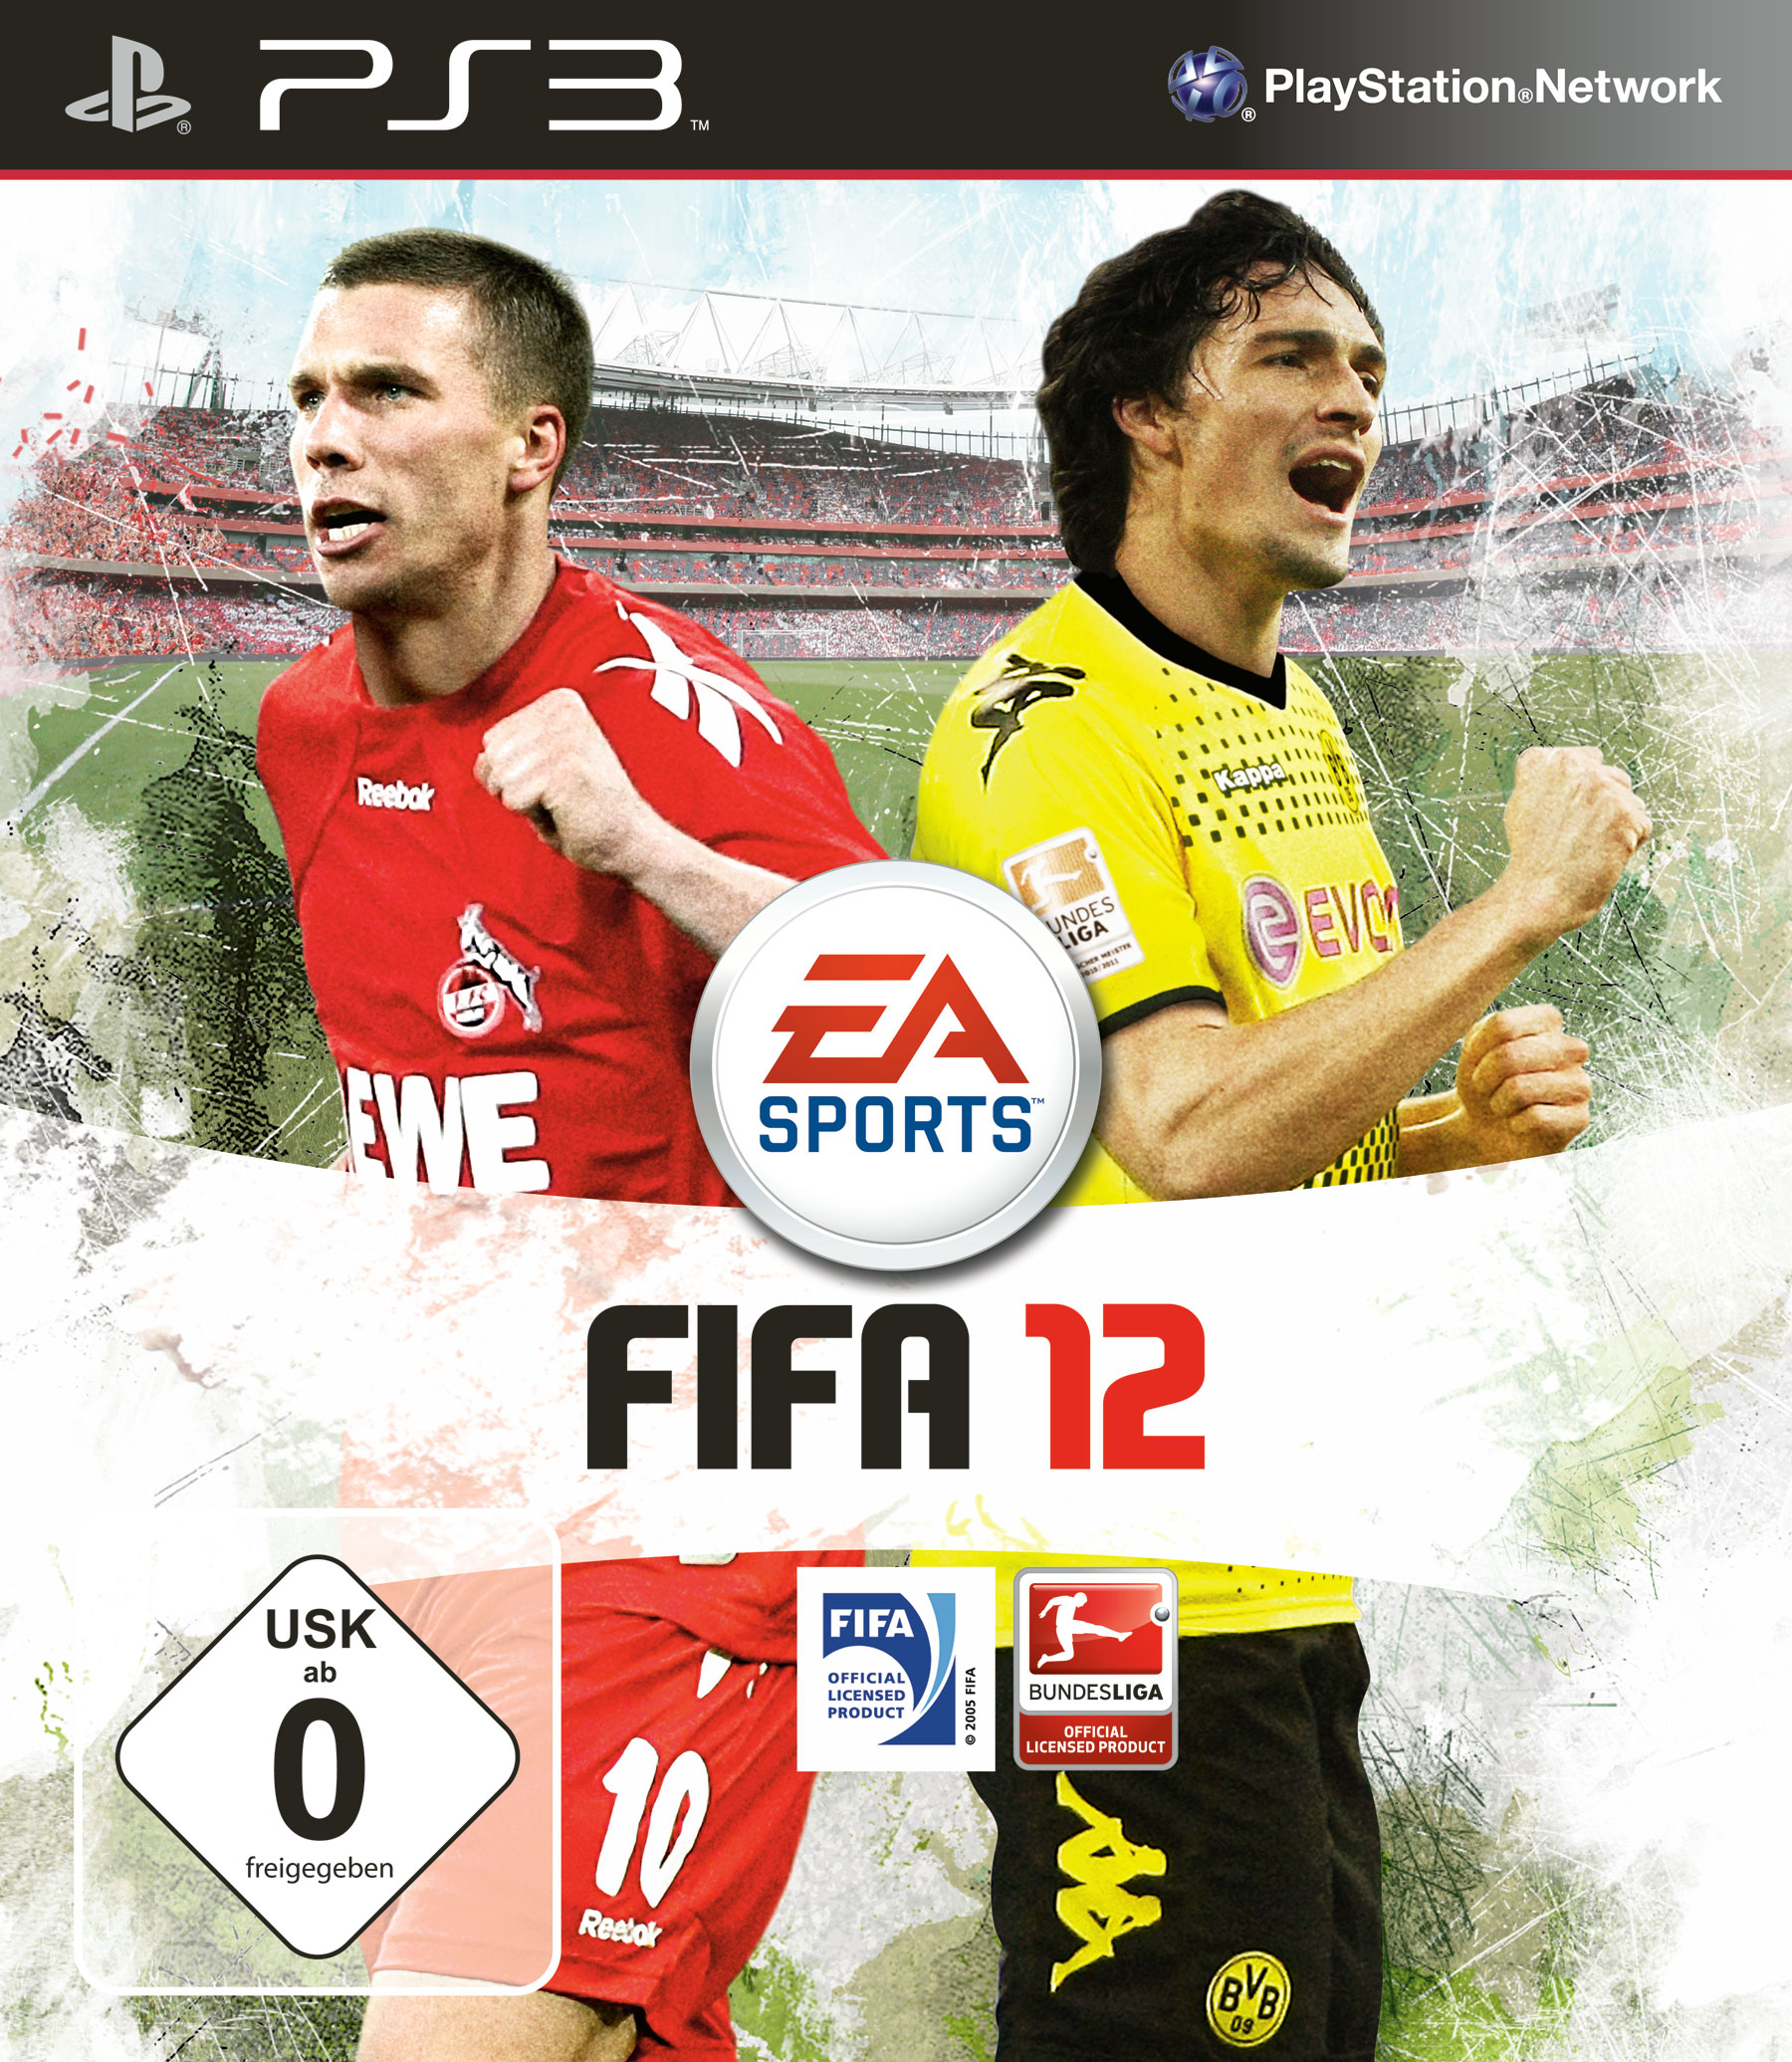 Обложка fifa. FIFA 12 [ps3]. ФИФА 2012 обложка. ФИФА 12 обложка Березуцкий. ФИФА 12 обложка обложка.